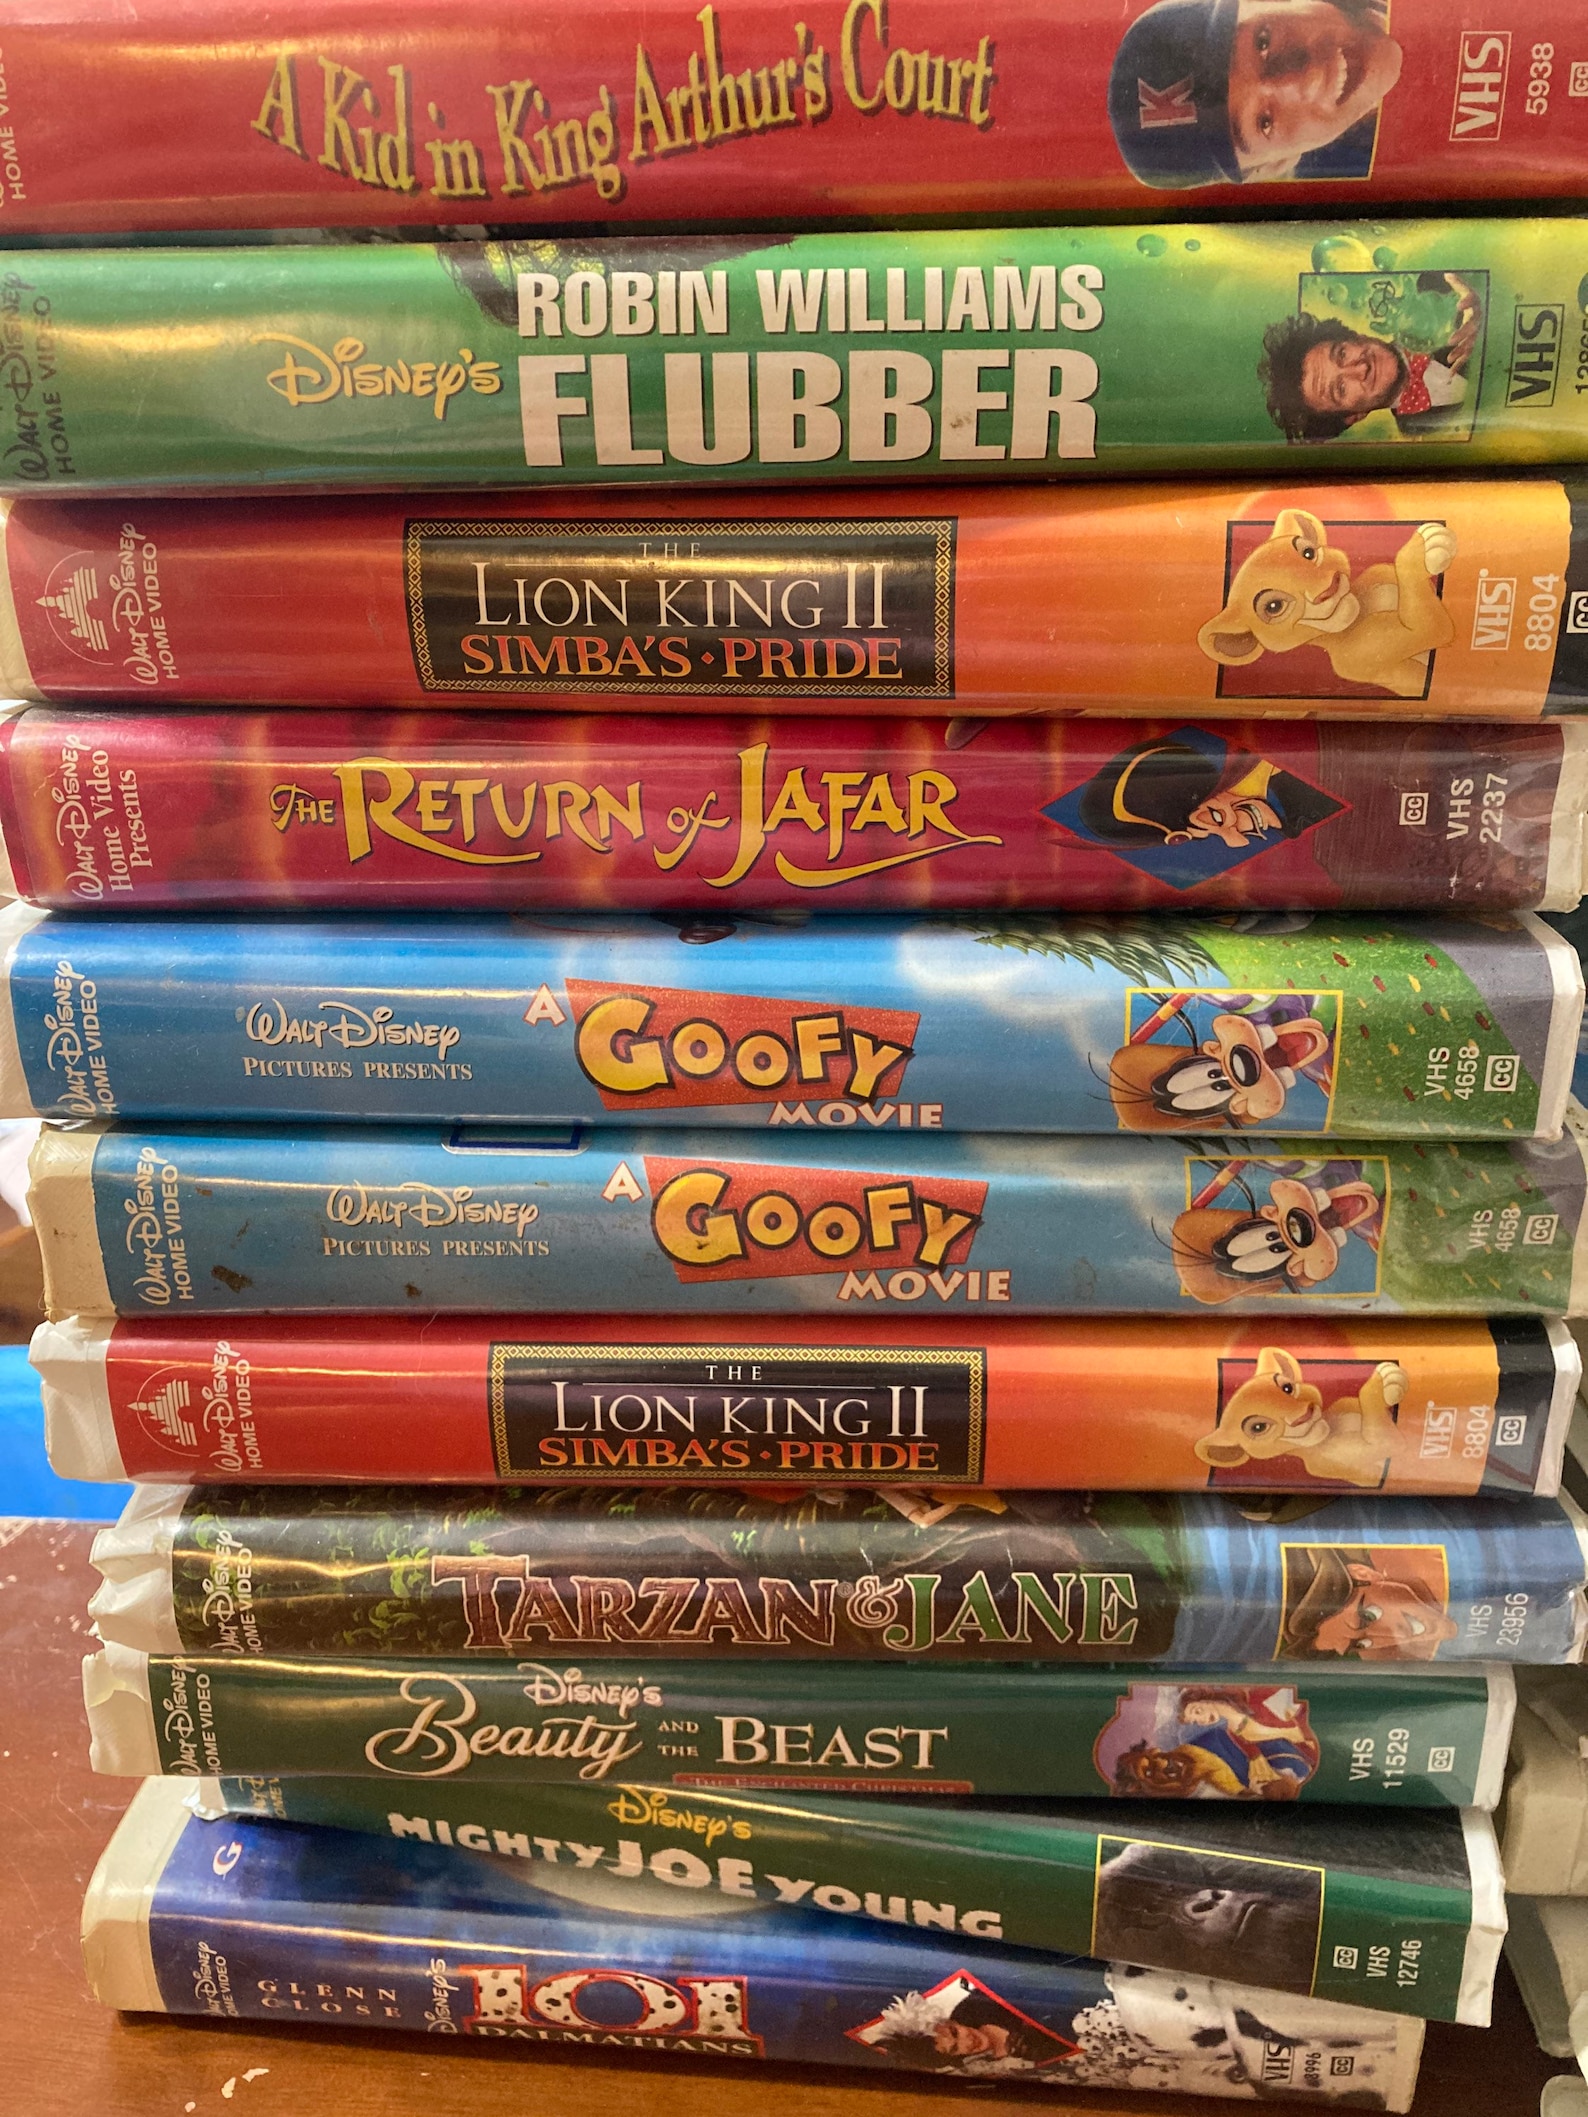 The Classic Walt Disney Home Video VHS